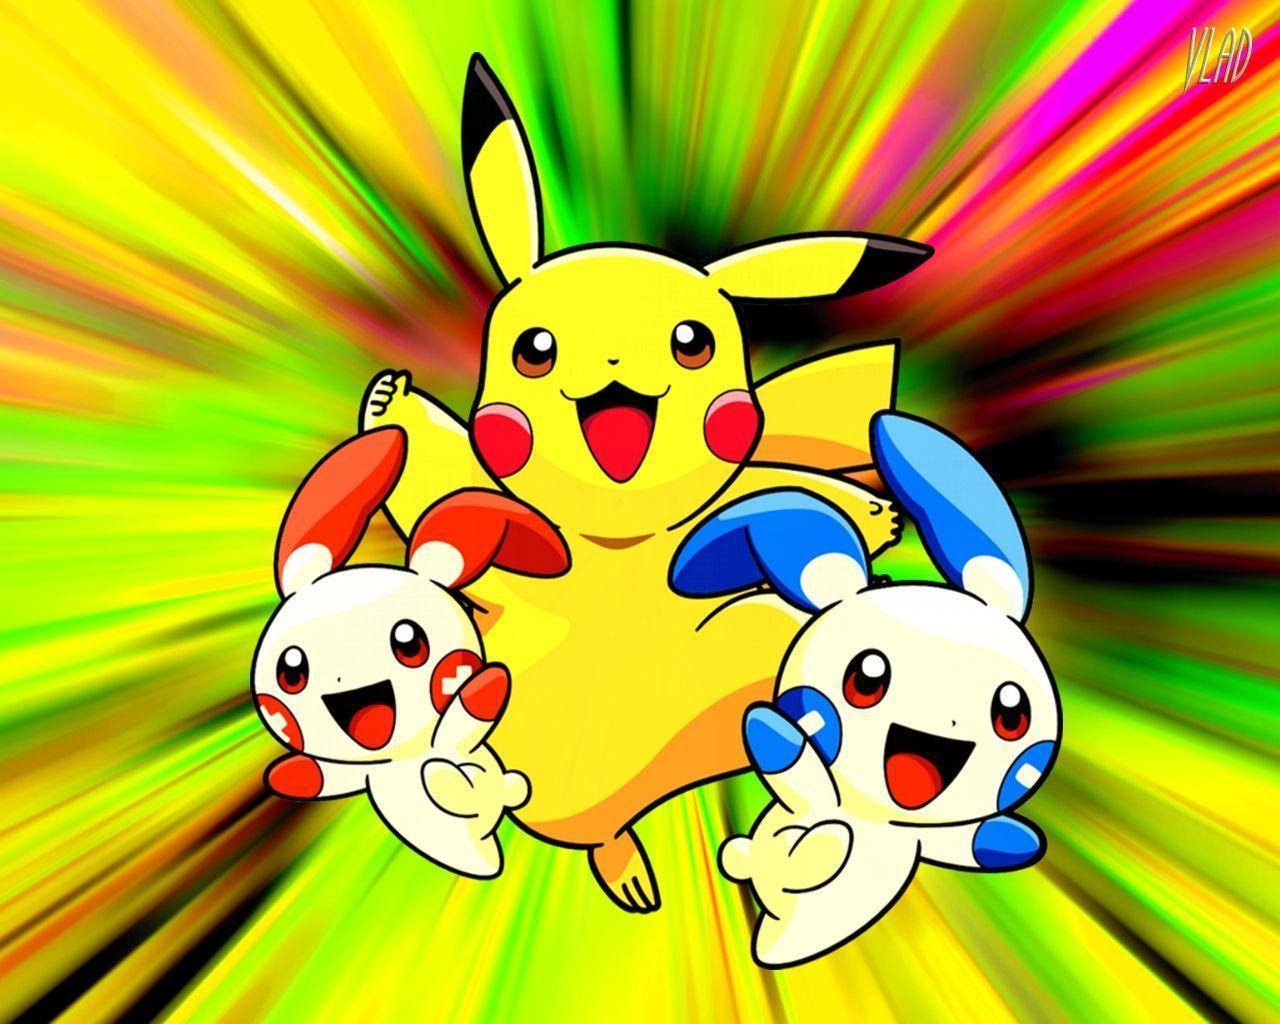 Cute Pokemon Wallpaper Pikachu High Resolution Widescreen Of Mobile